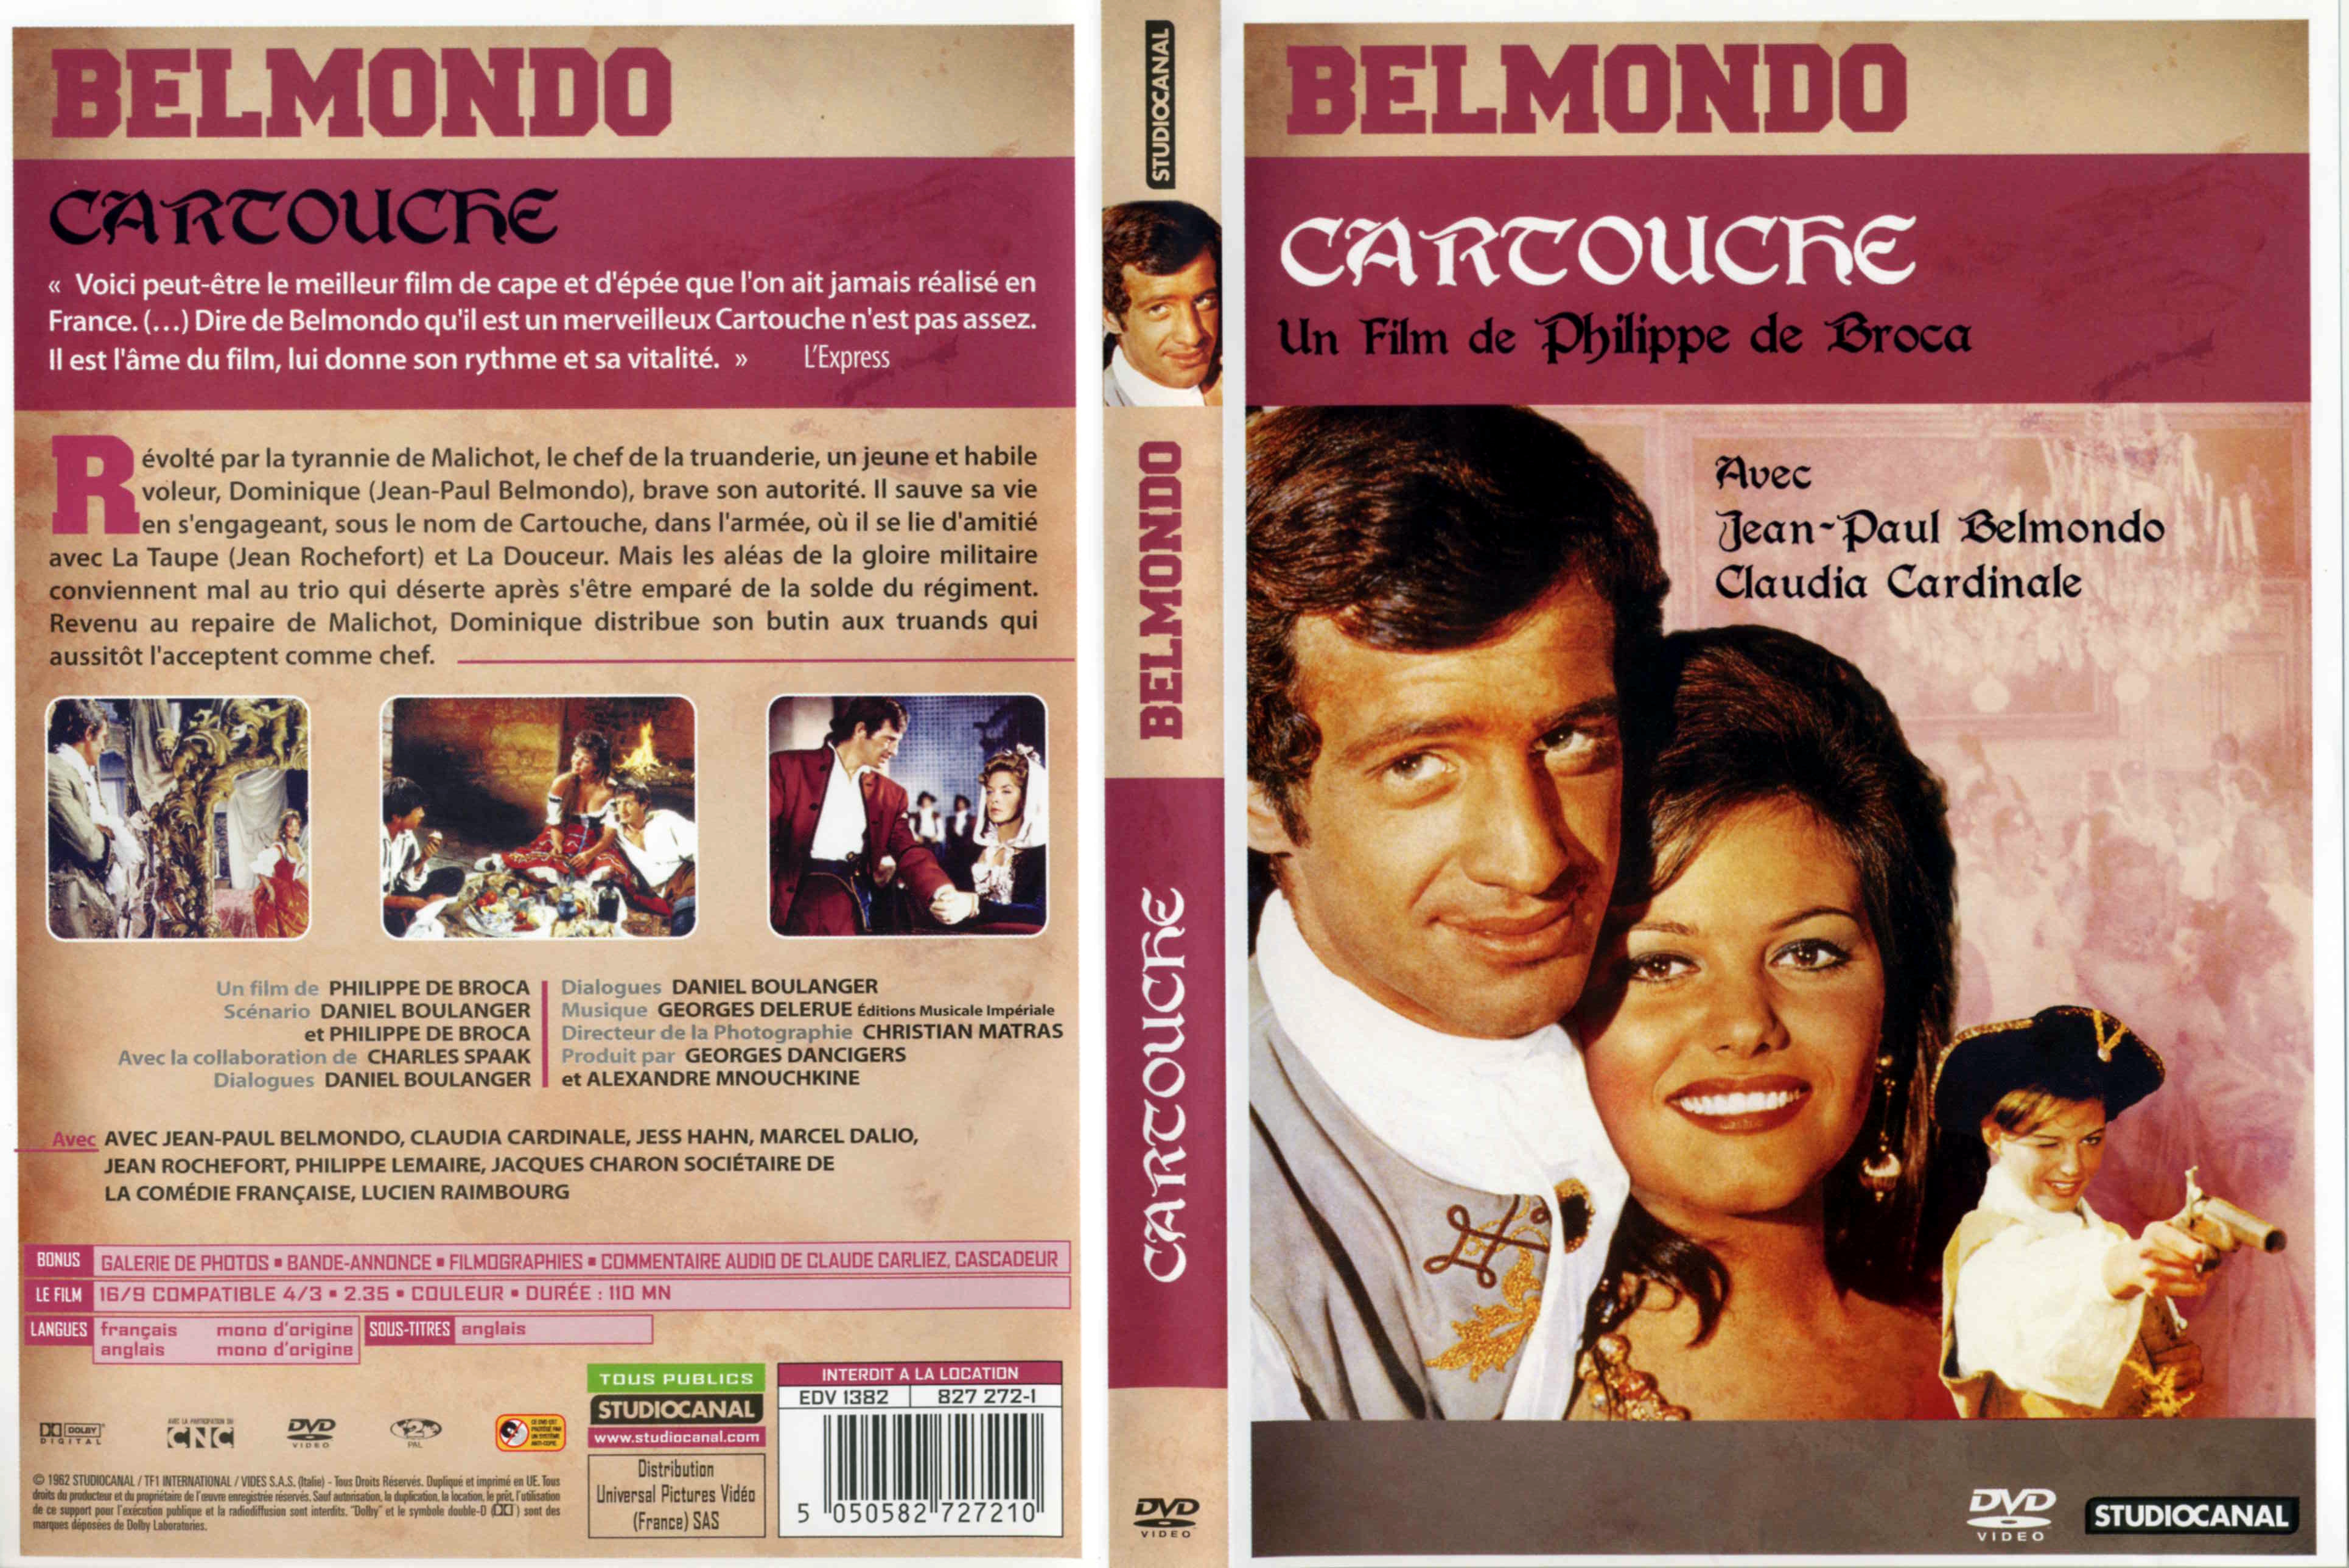 Jaquette DVD Cartouche v4